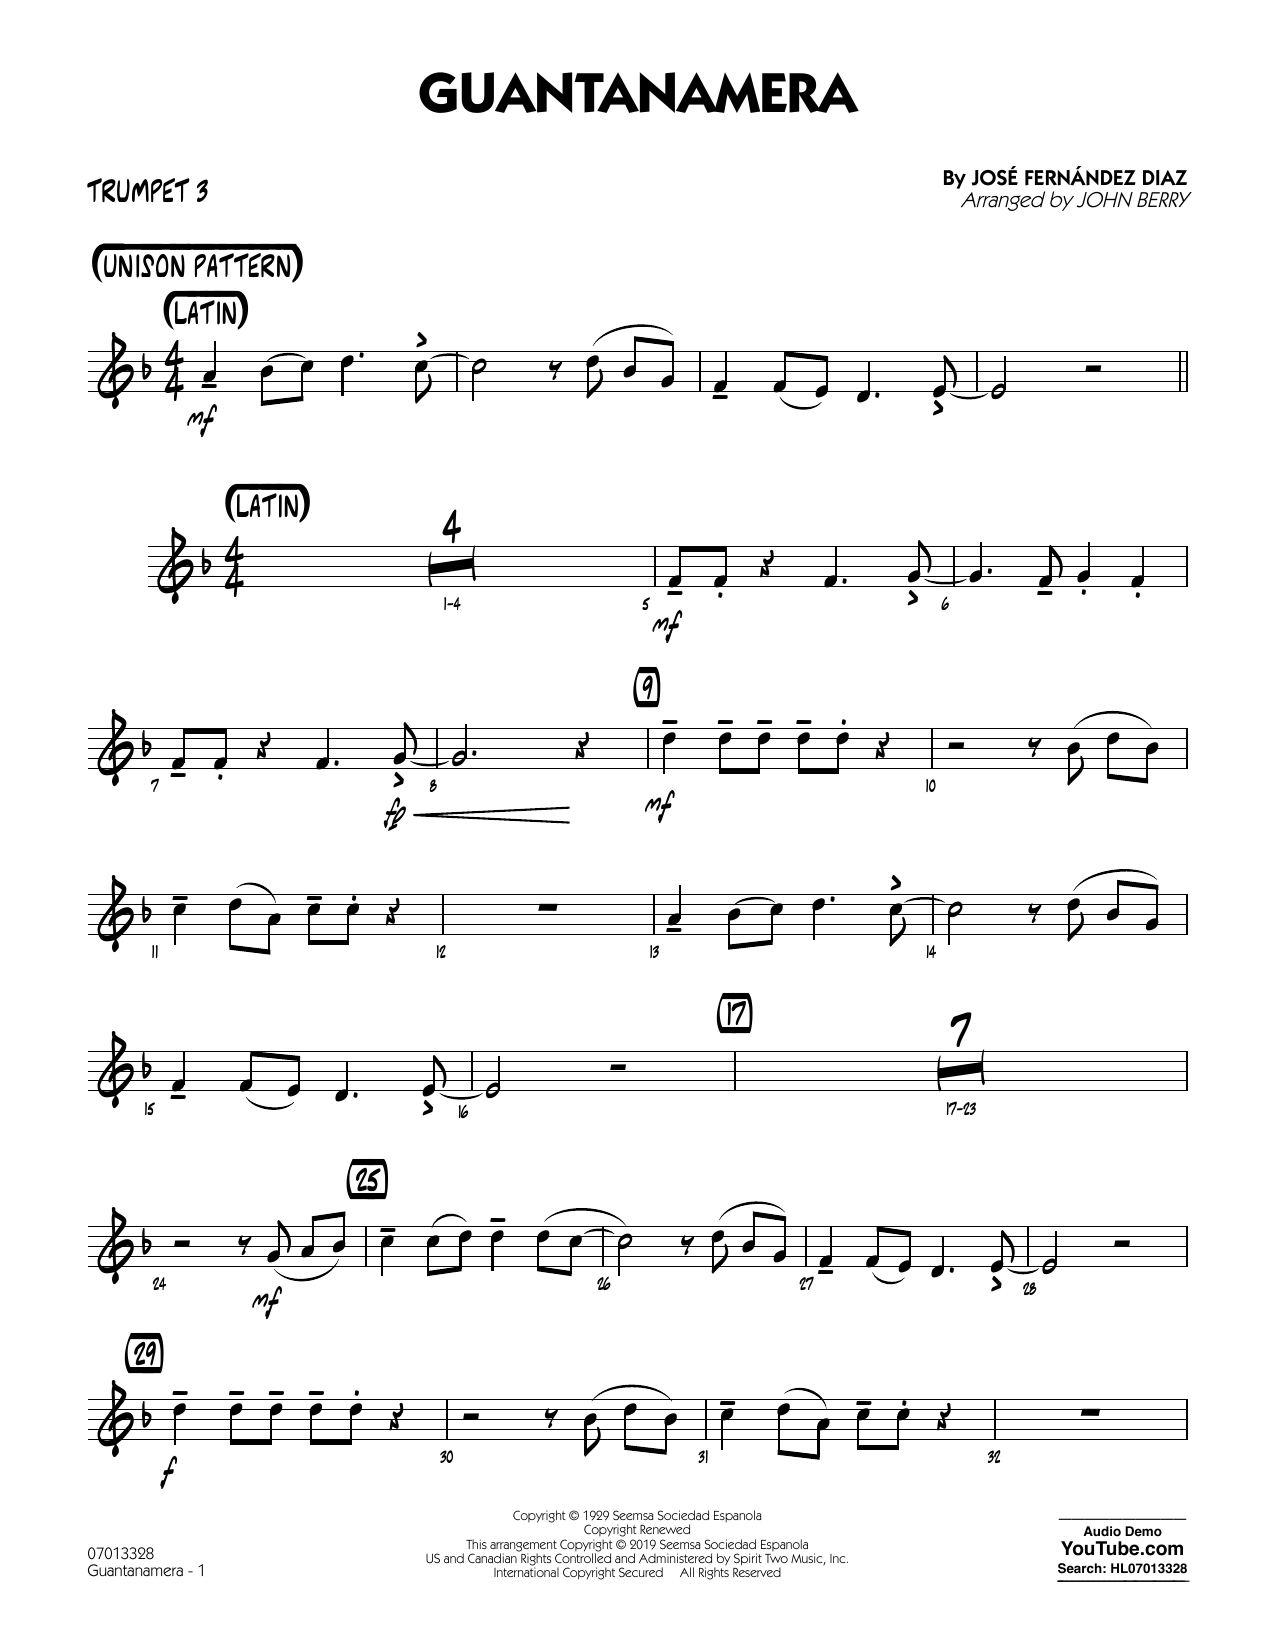 José Fernández Diaz Guantanamera (arr. John Berry) - Trumpet 3 Sheet Music Notes & Chords for Jazz Ensemble - Download or Print PDF